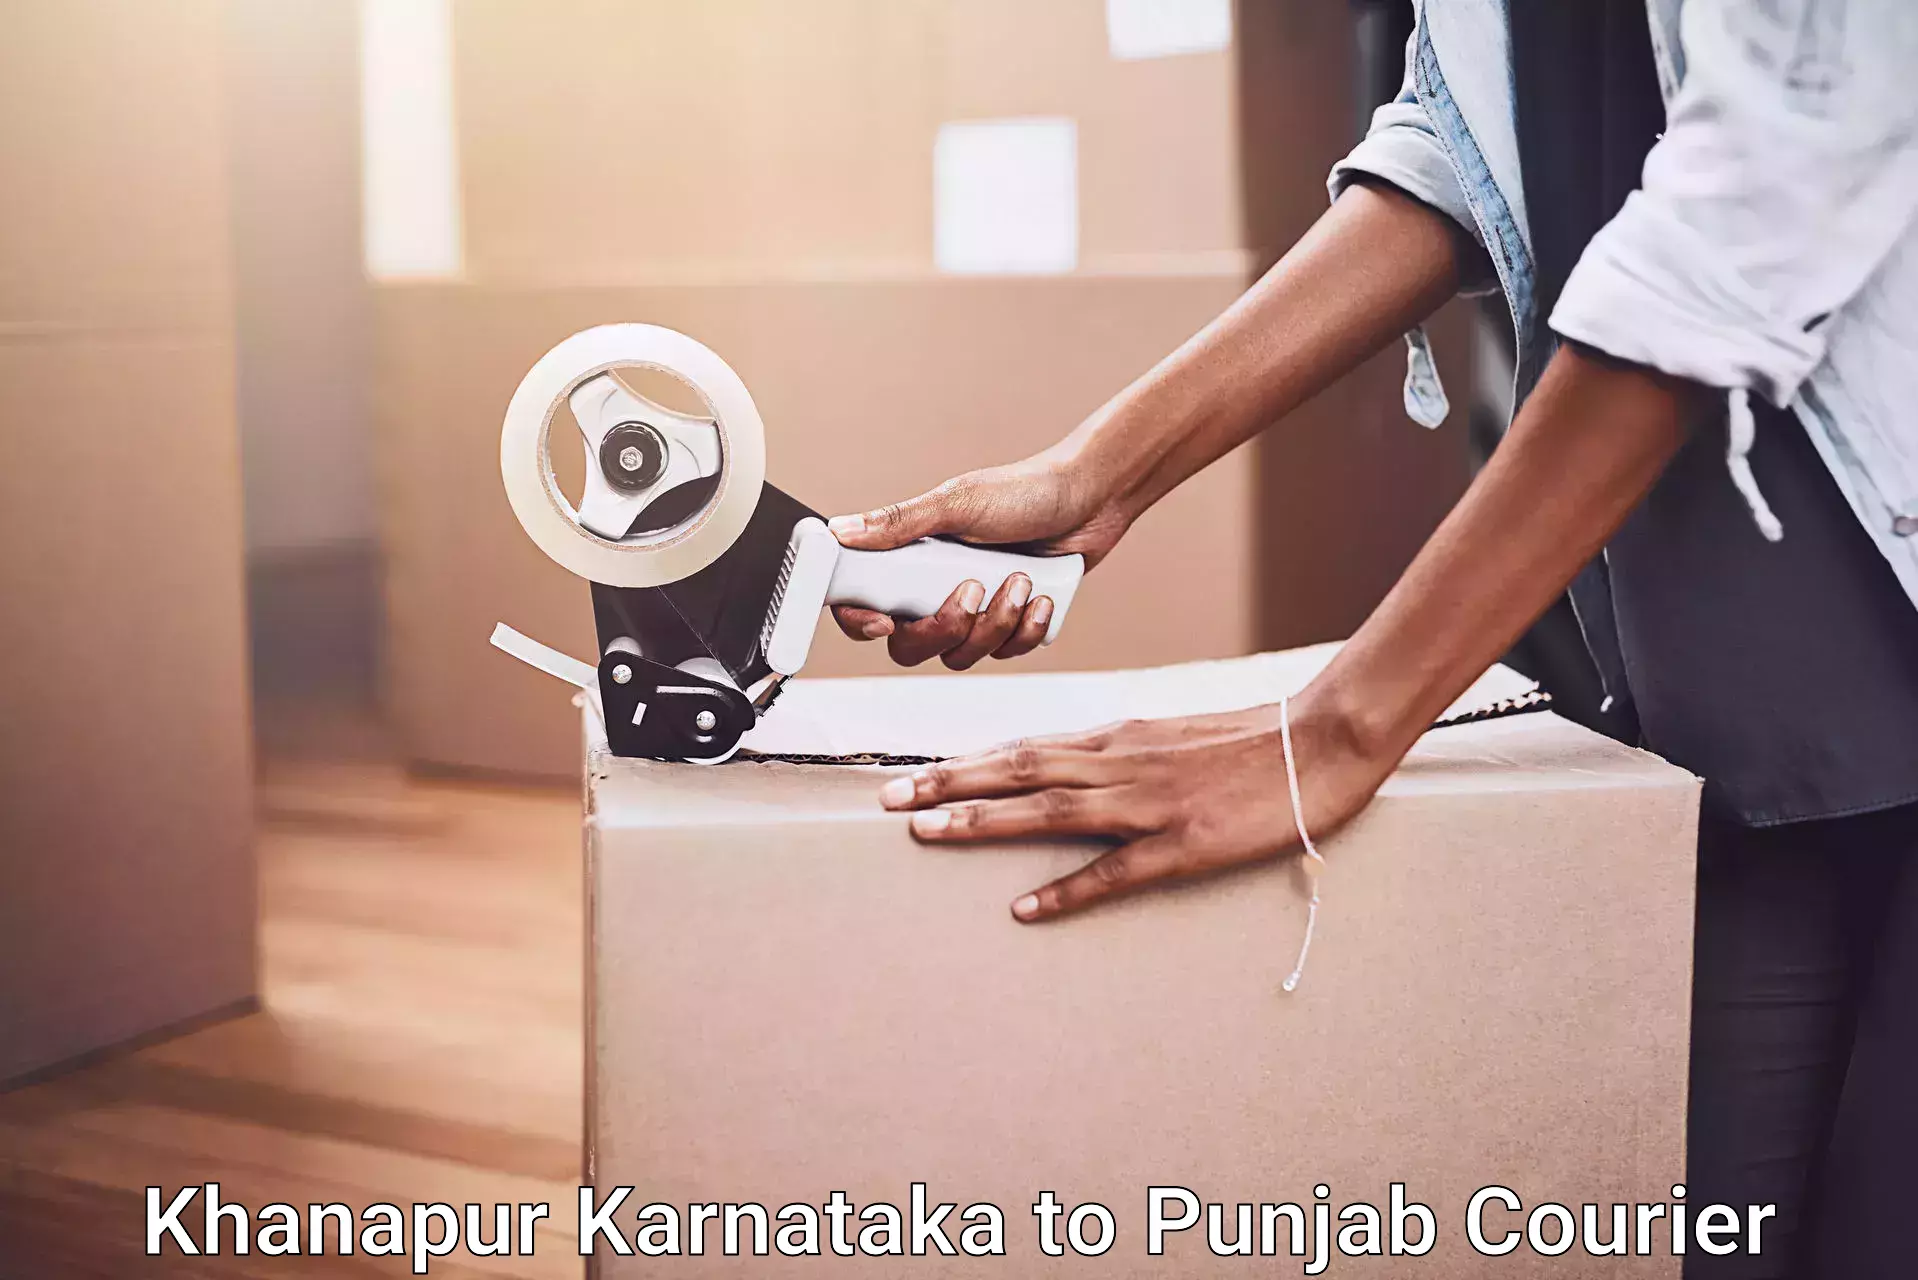 Quality moving and storage Khanapur Karnataka to Punjab